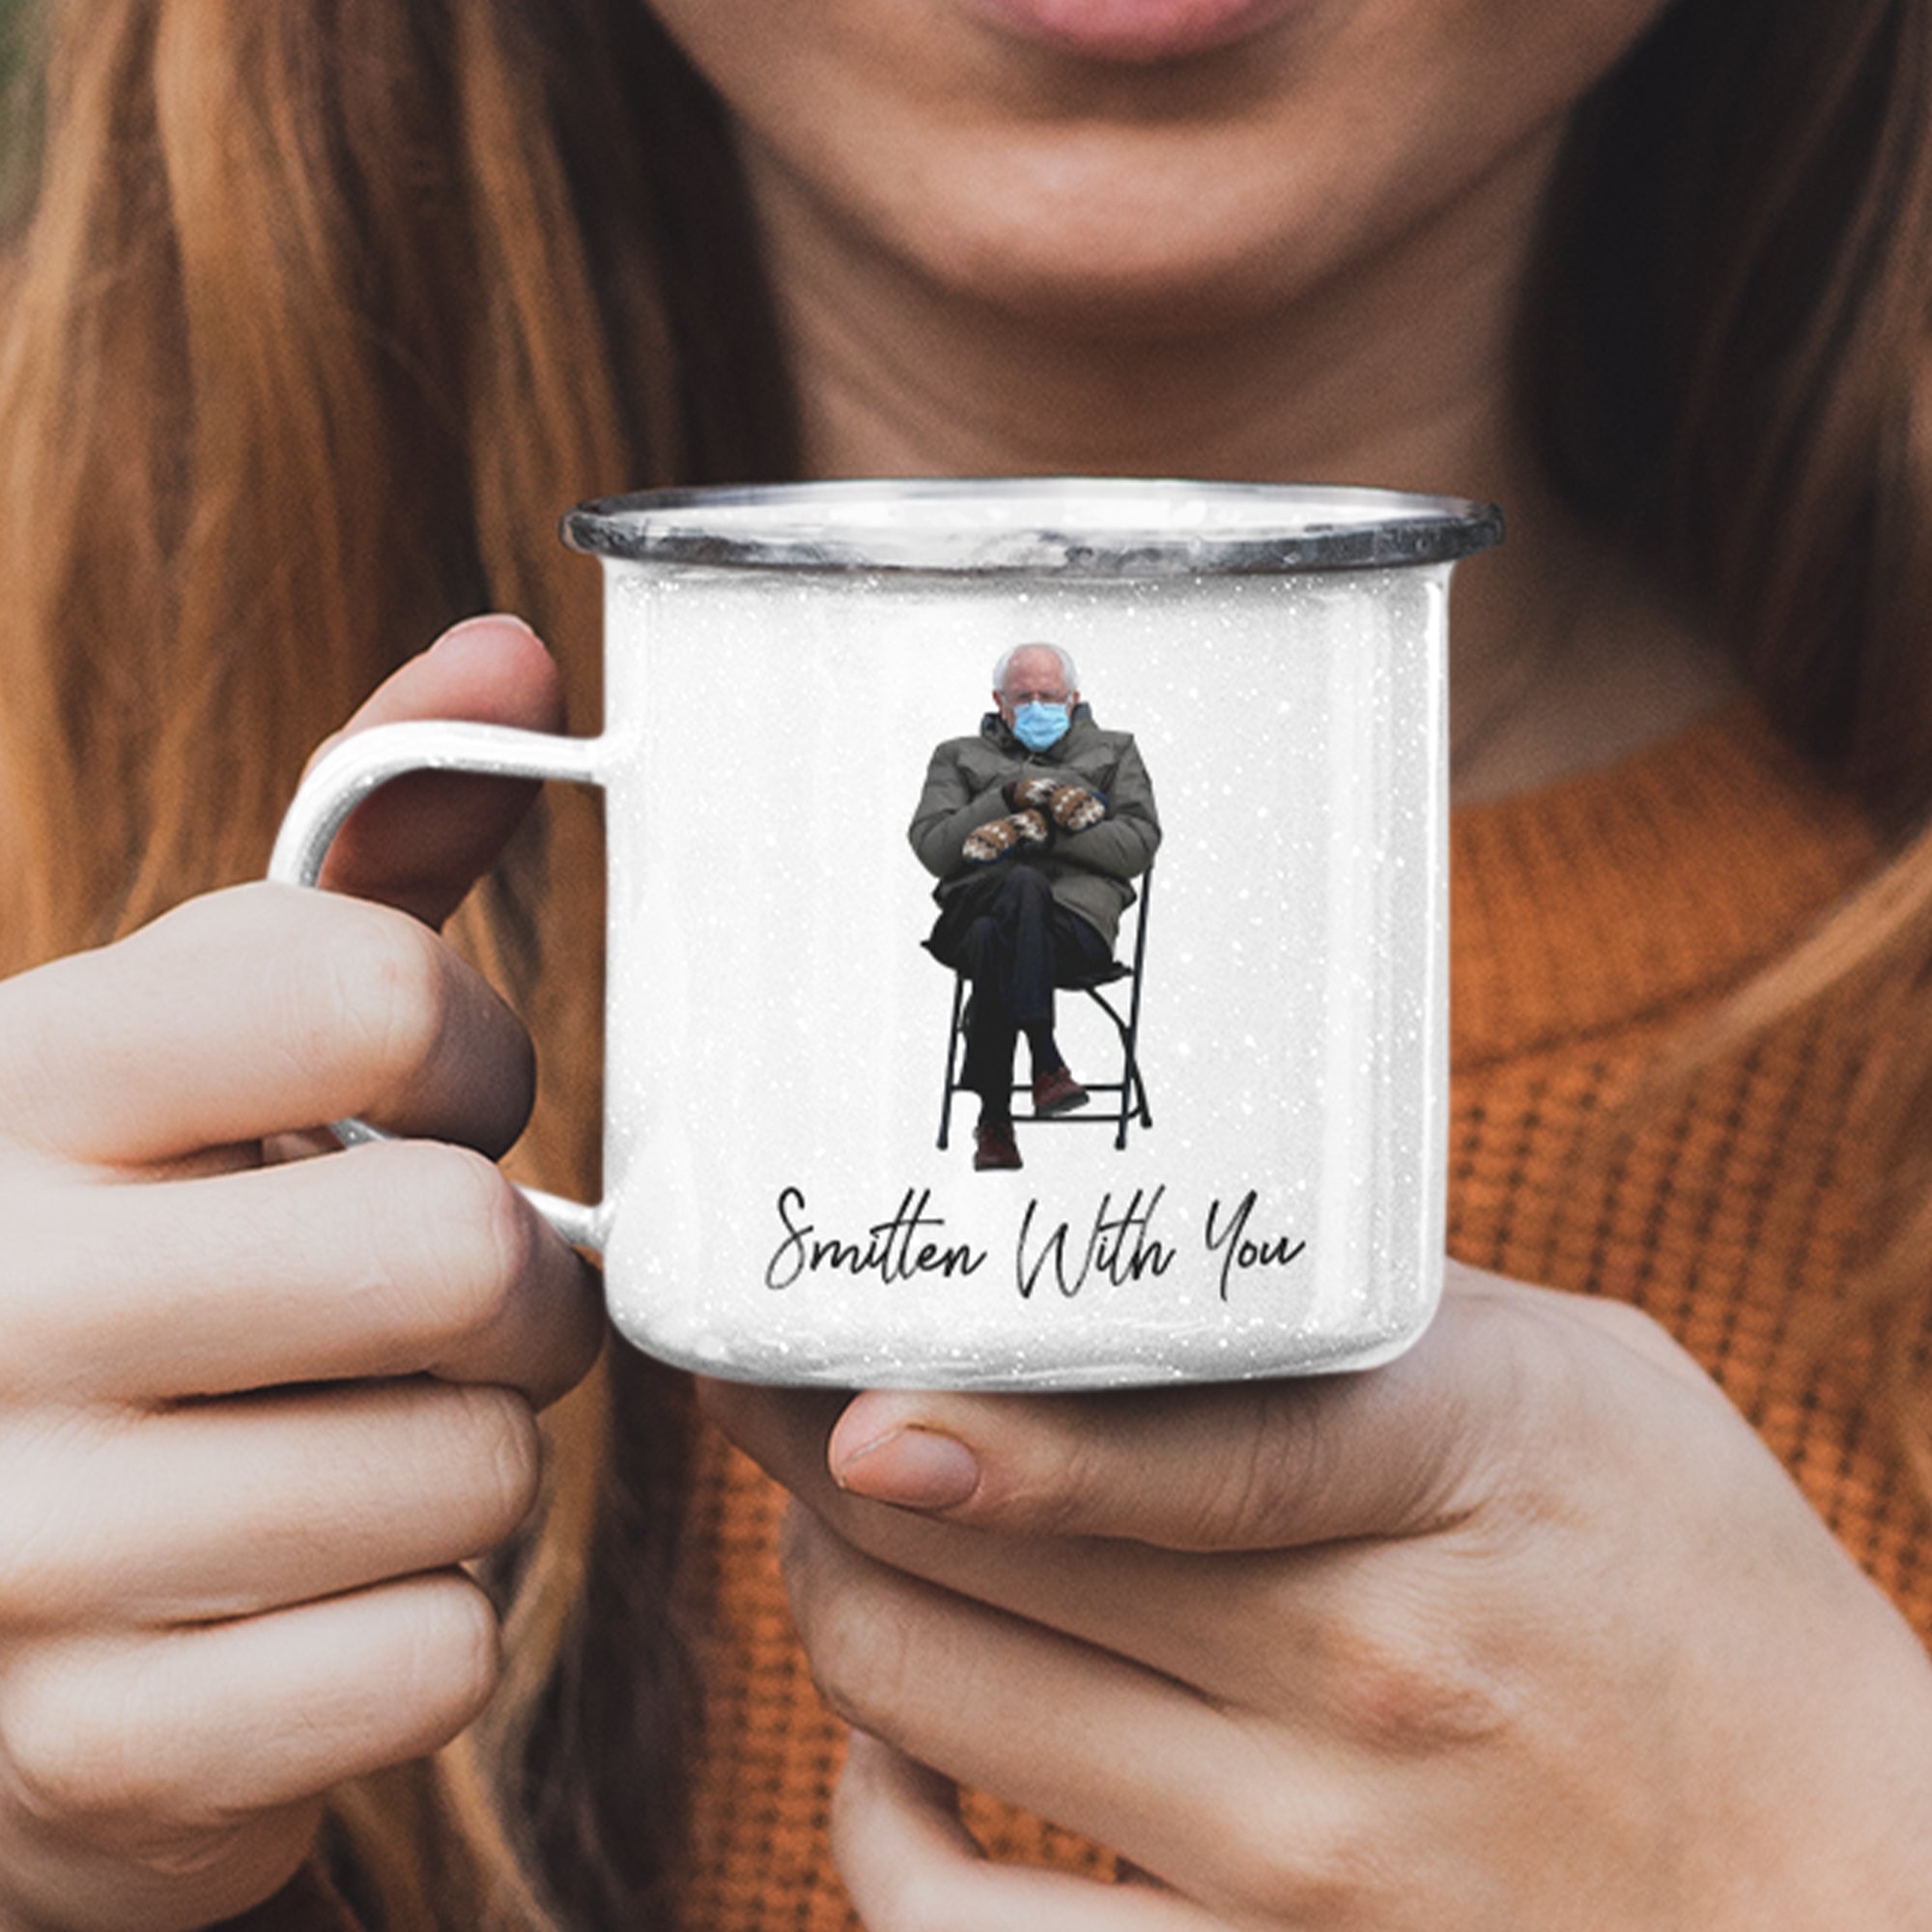 Bernie's Mittens Camp Mug - Hilarious "Smitten For You" Enamel Mug